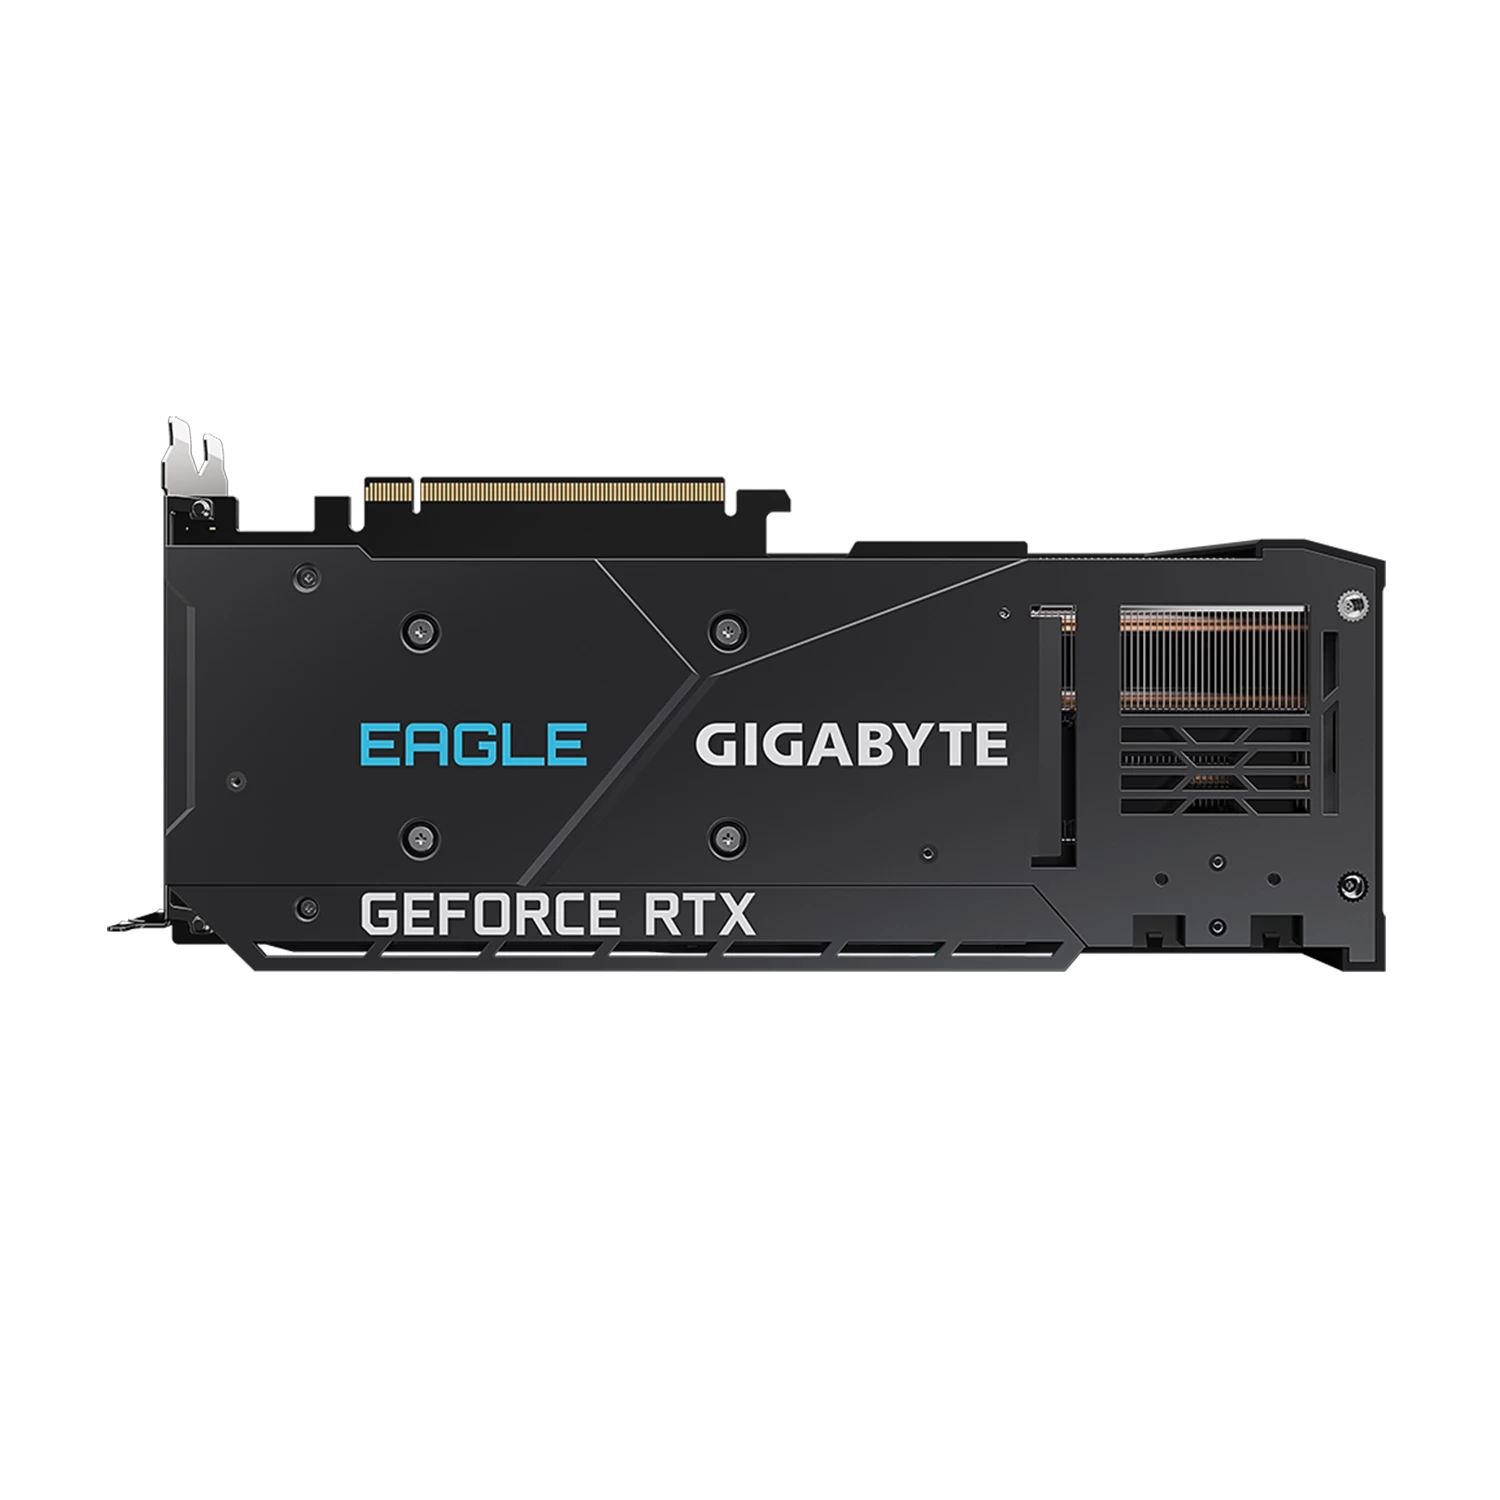 Gigabyte GeForce RTX 3070 Ti EAGLE 8G Back View